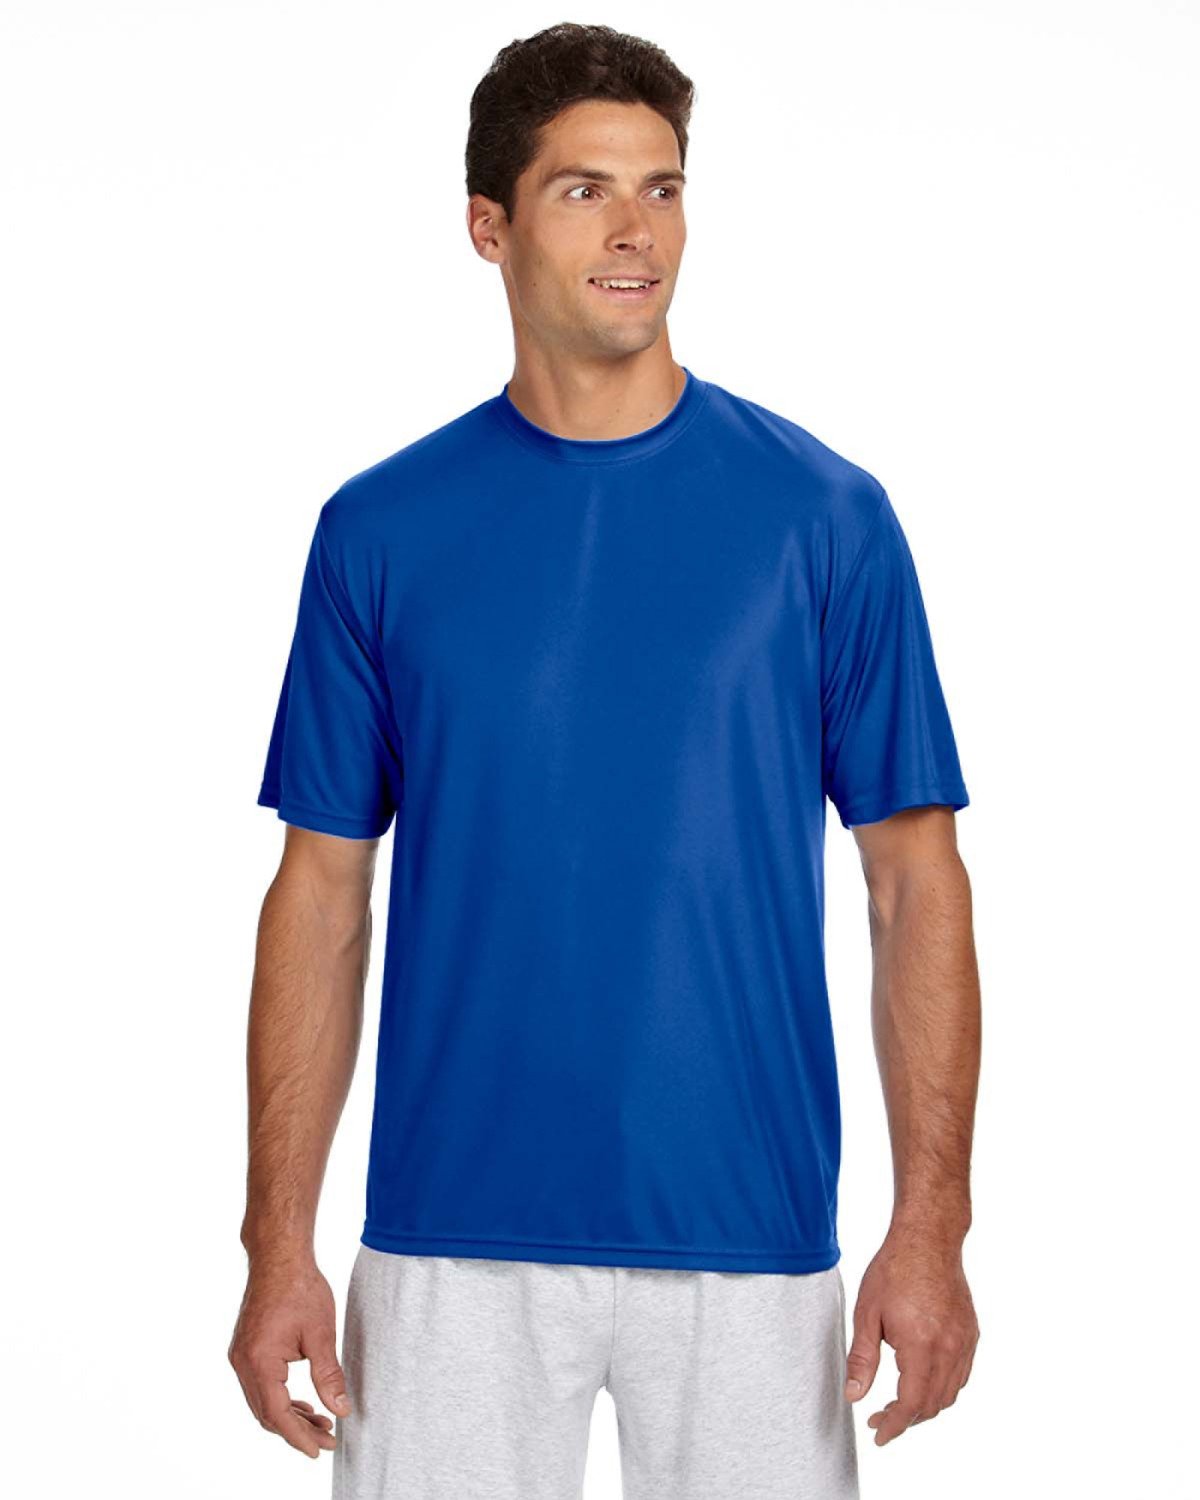 A4 Men's Cooling Performance T-Shirt ROYAL 